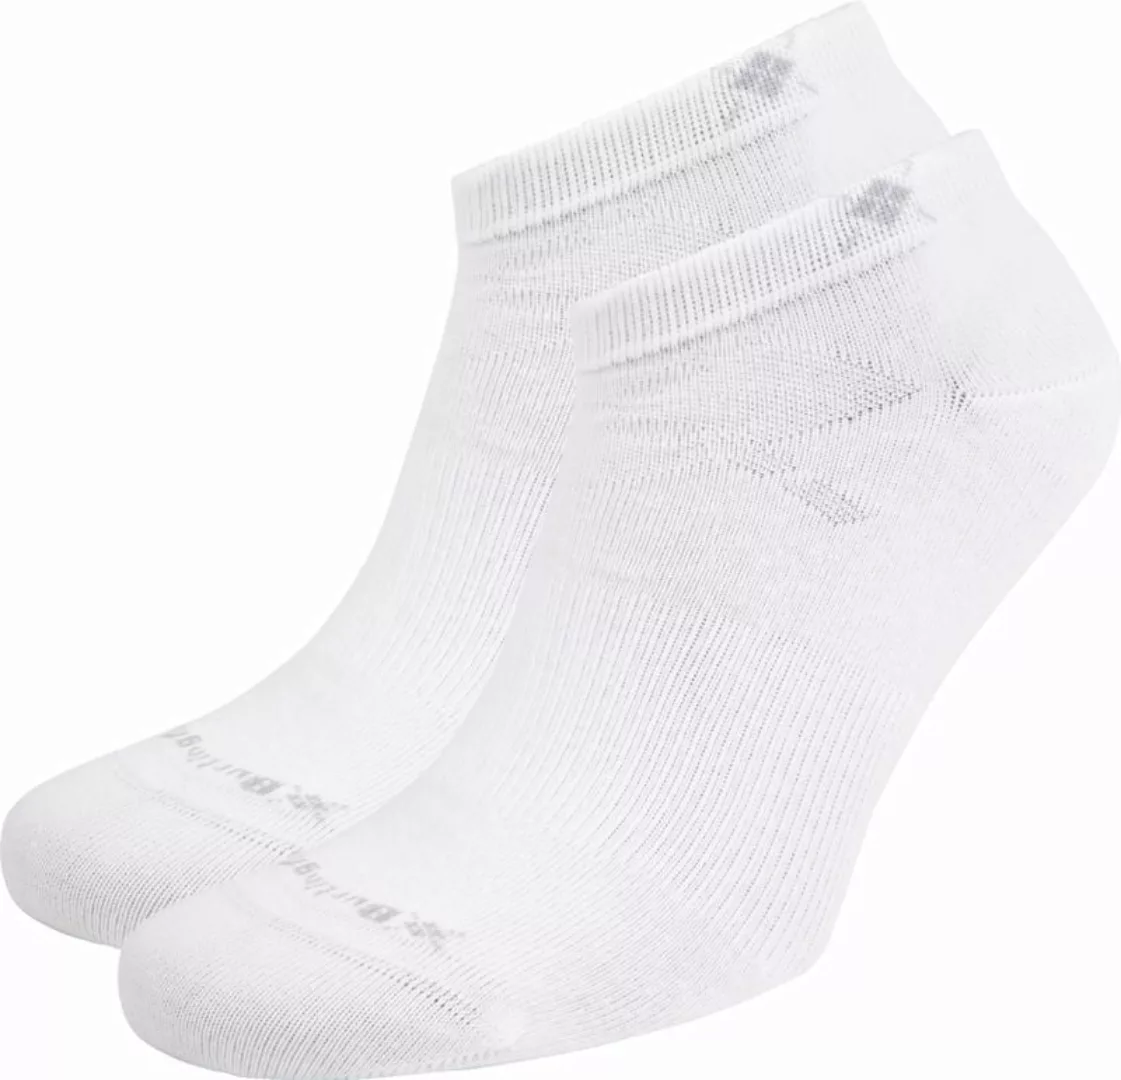 Burlington Everyday Socke Weiß 2-Pack - Größe 39-42 günstig online kaufen